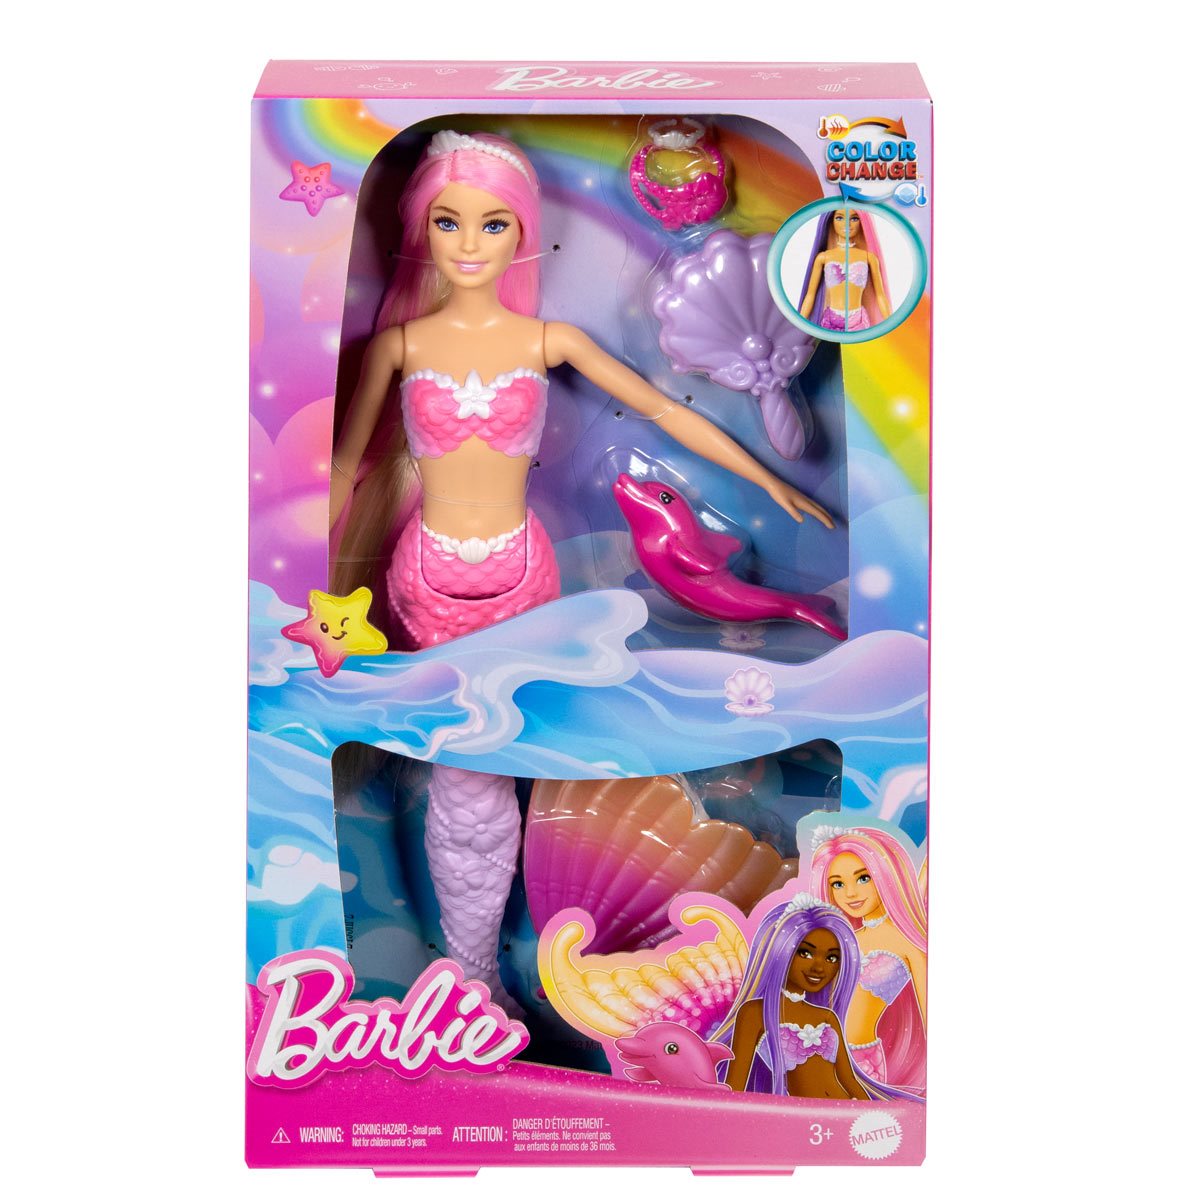 Barbie Mermaid Doll with Lilac Hair - Entertainment Earth